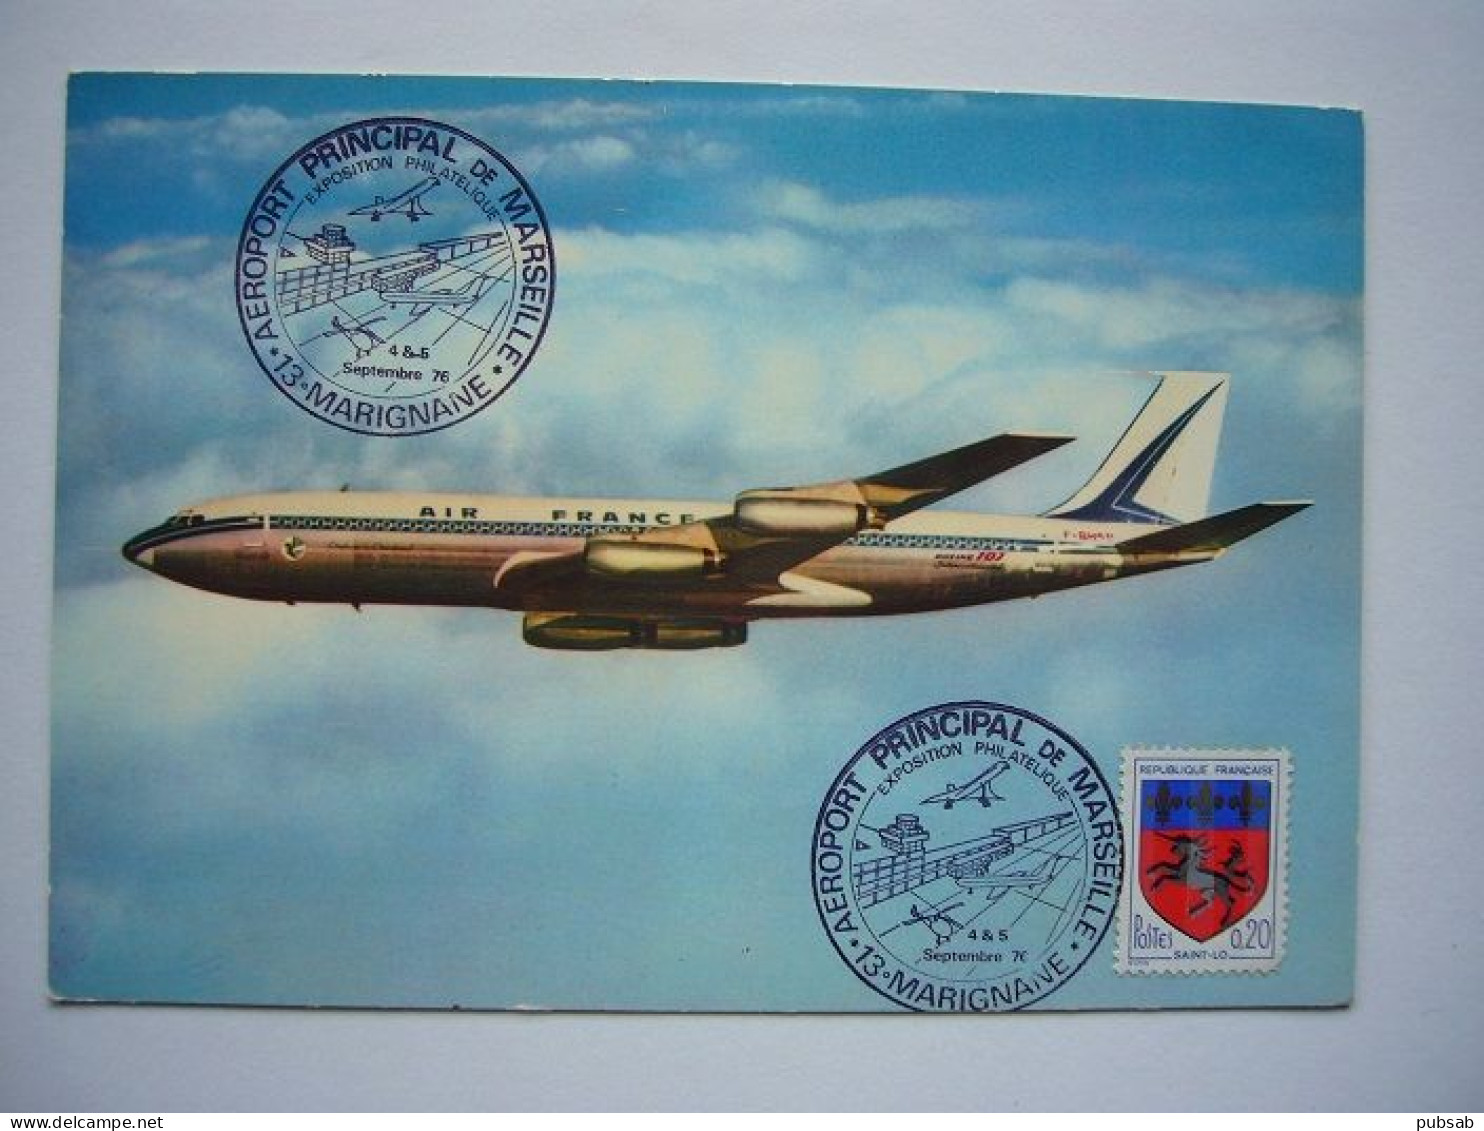 Avion / Airplane / AIR FRANCE / Boeing 707/ Carte Maximum / Stamp "Aéroport Peincipal De Marseille" - 1946-....: Modern Era